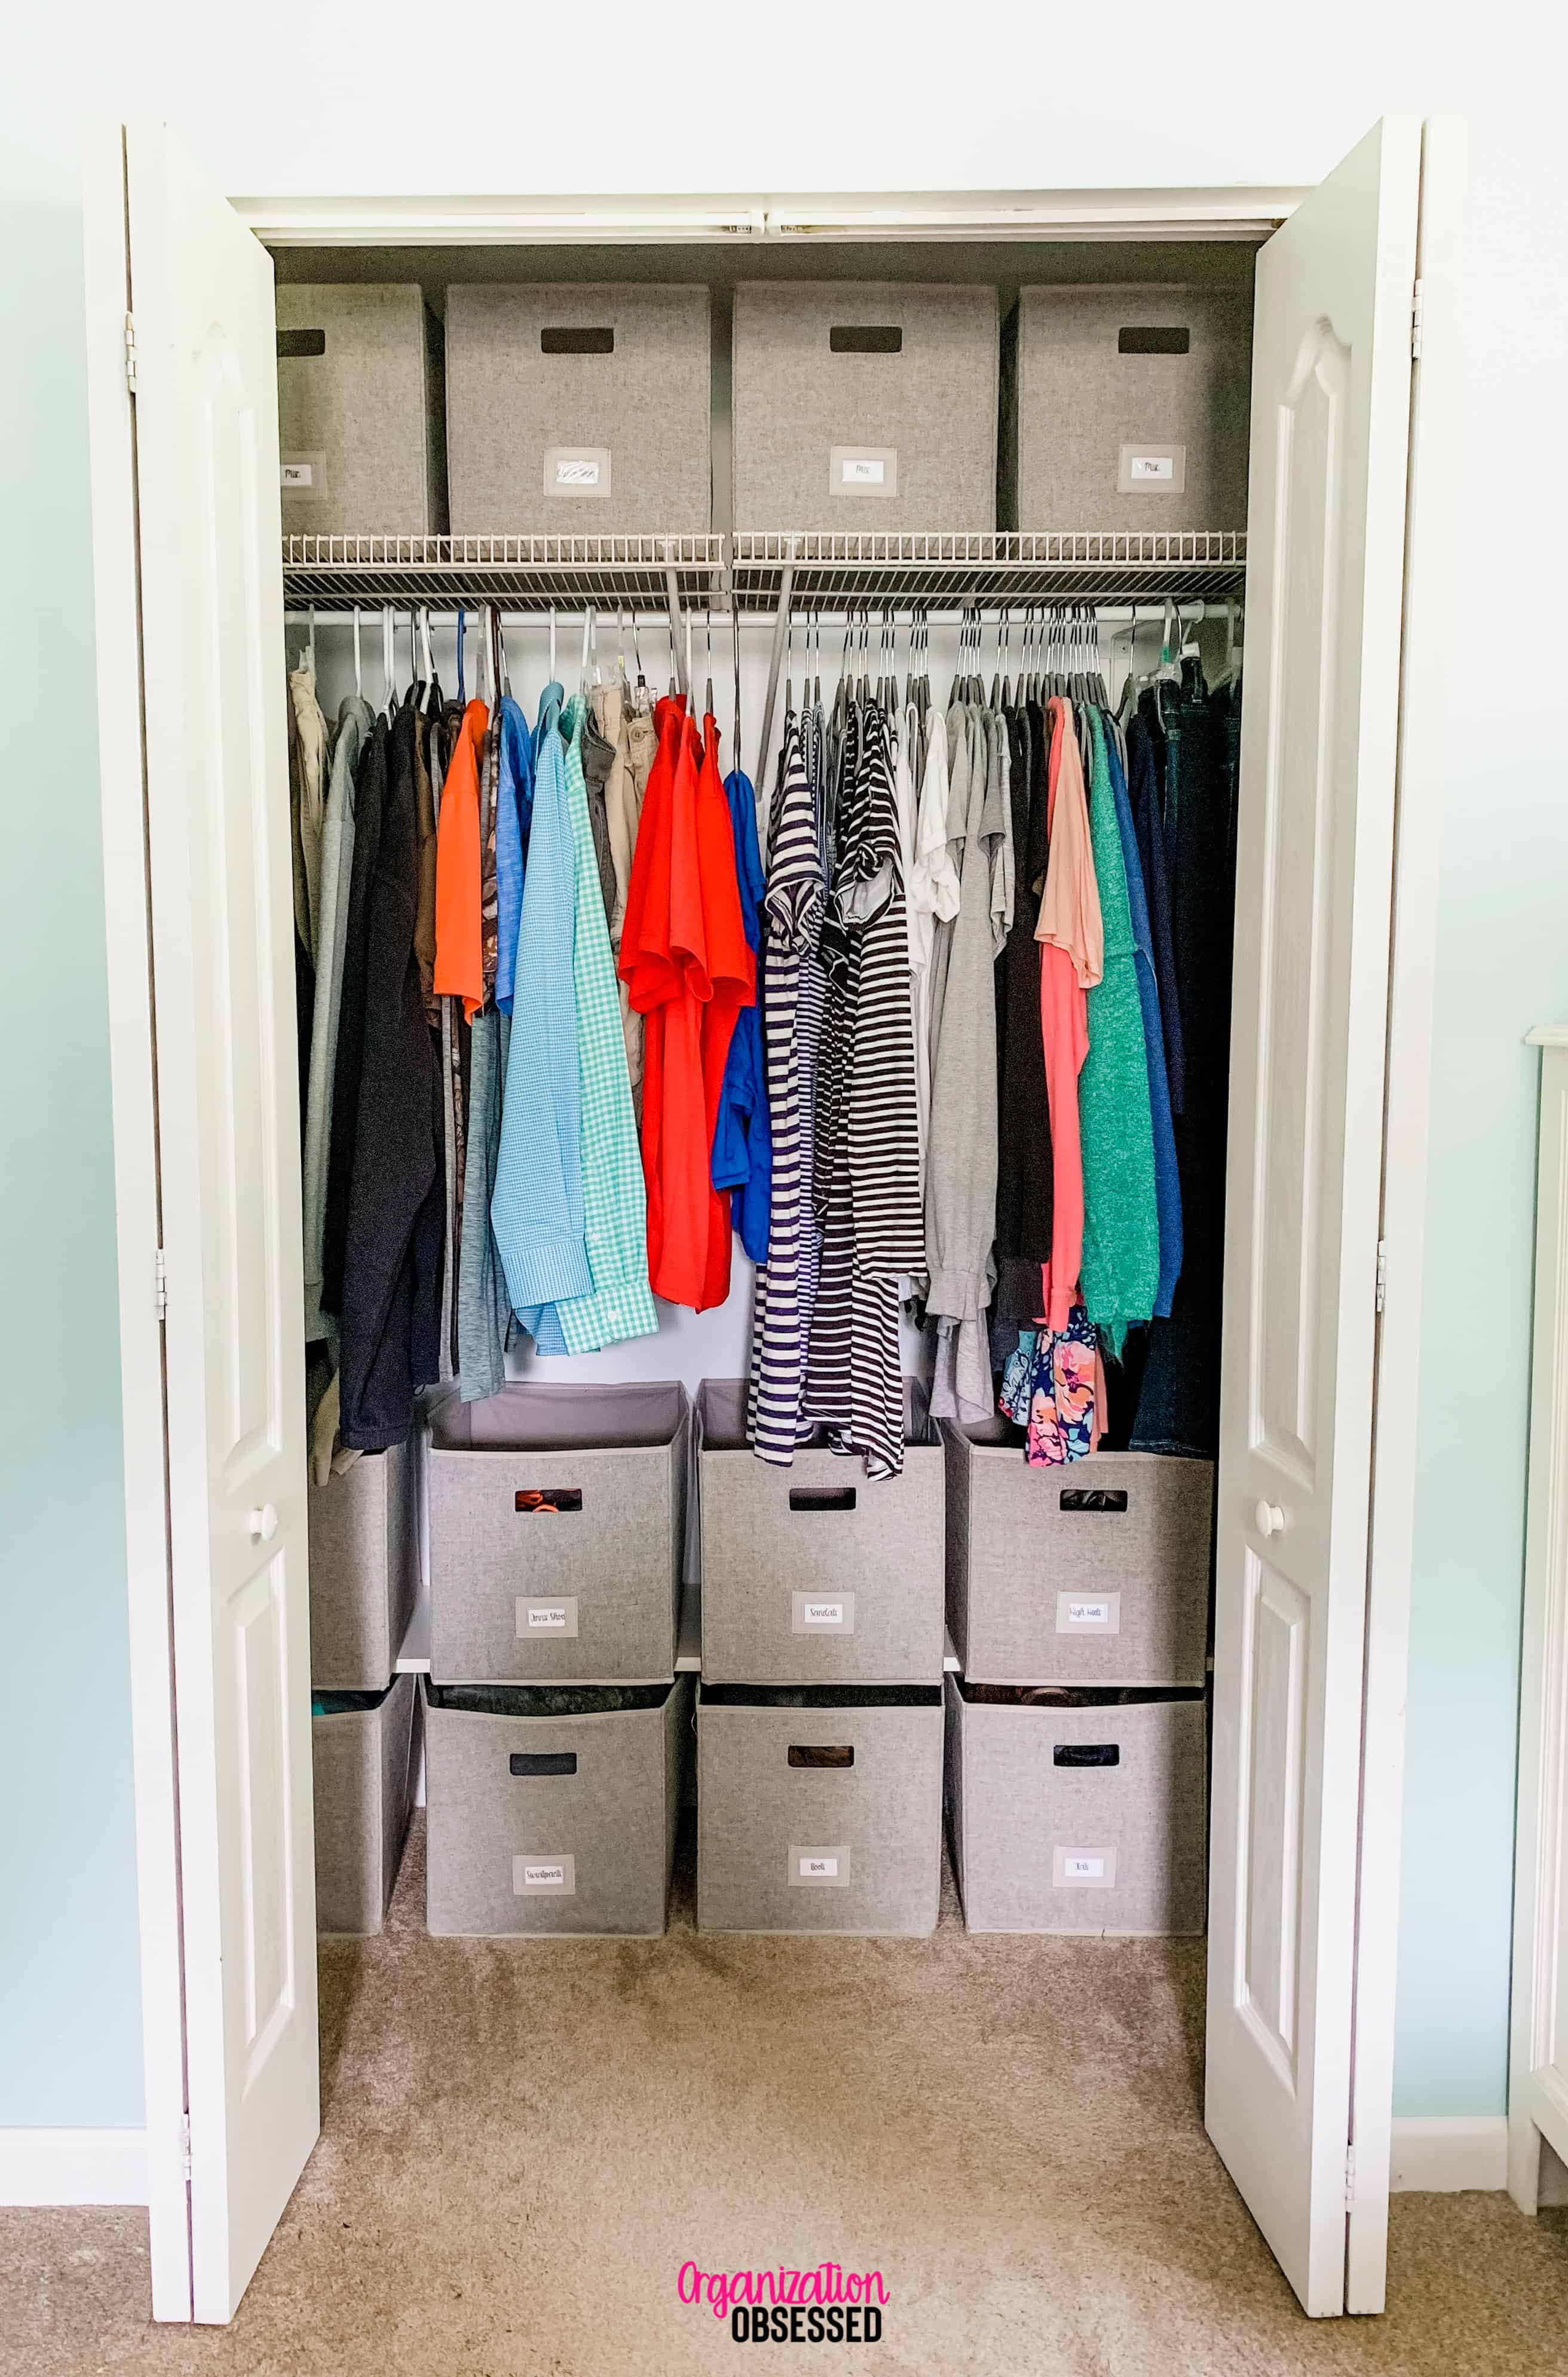 10 Small Closet Organization Ideas To Maximize Your Storage